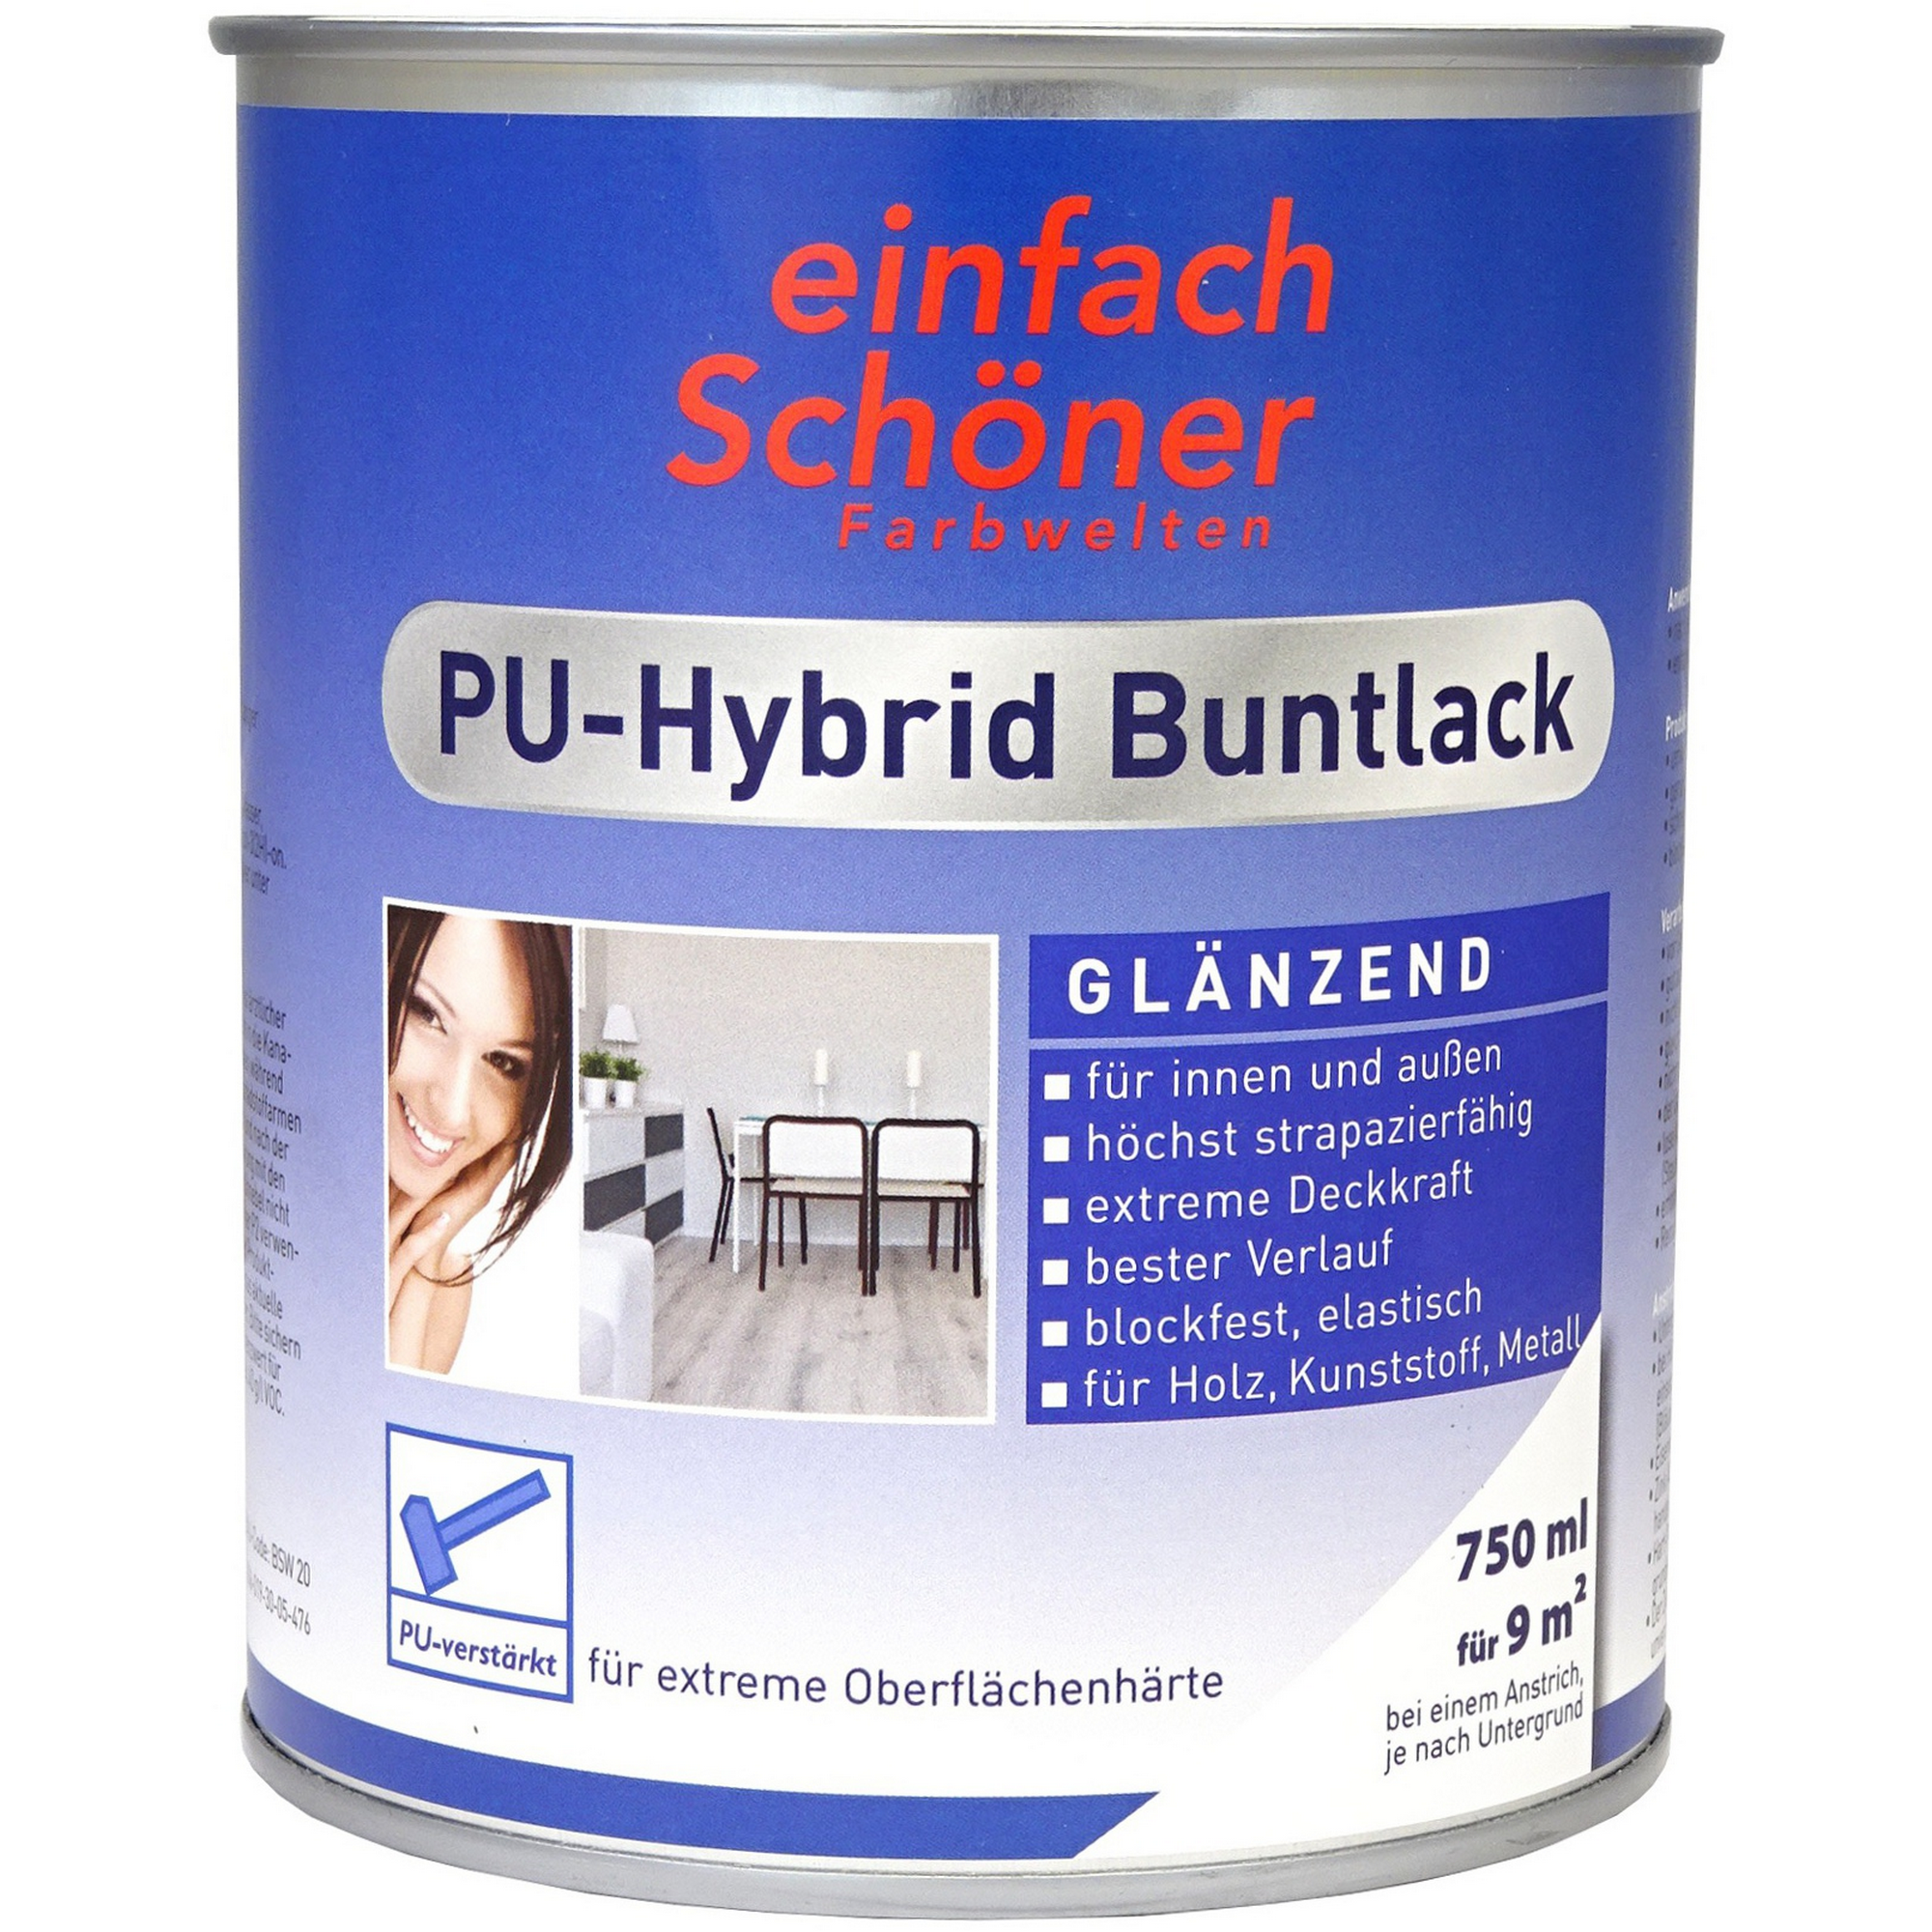 PU-Hybrid Buntlack anthrazitgrau glänzend 750 ml + product picture